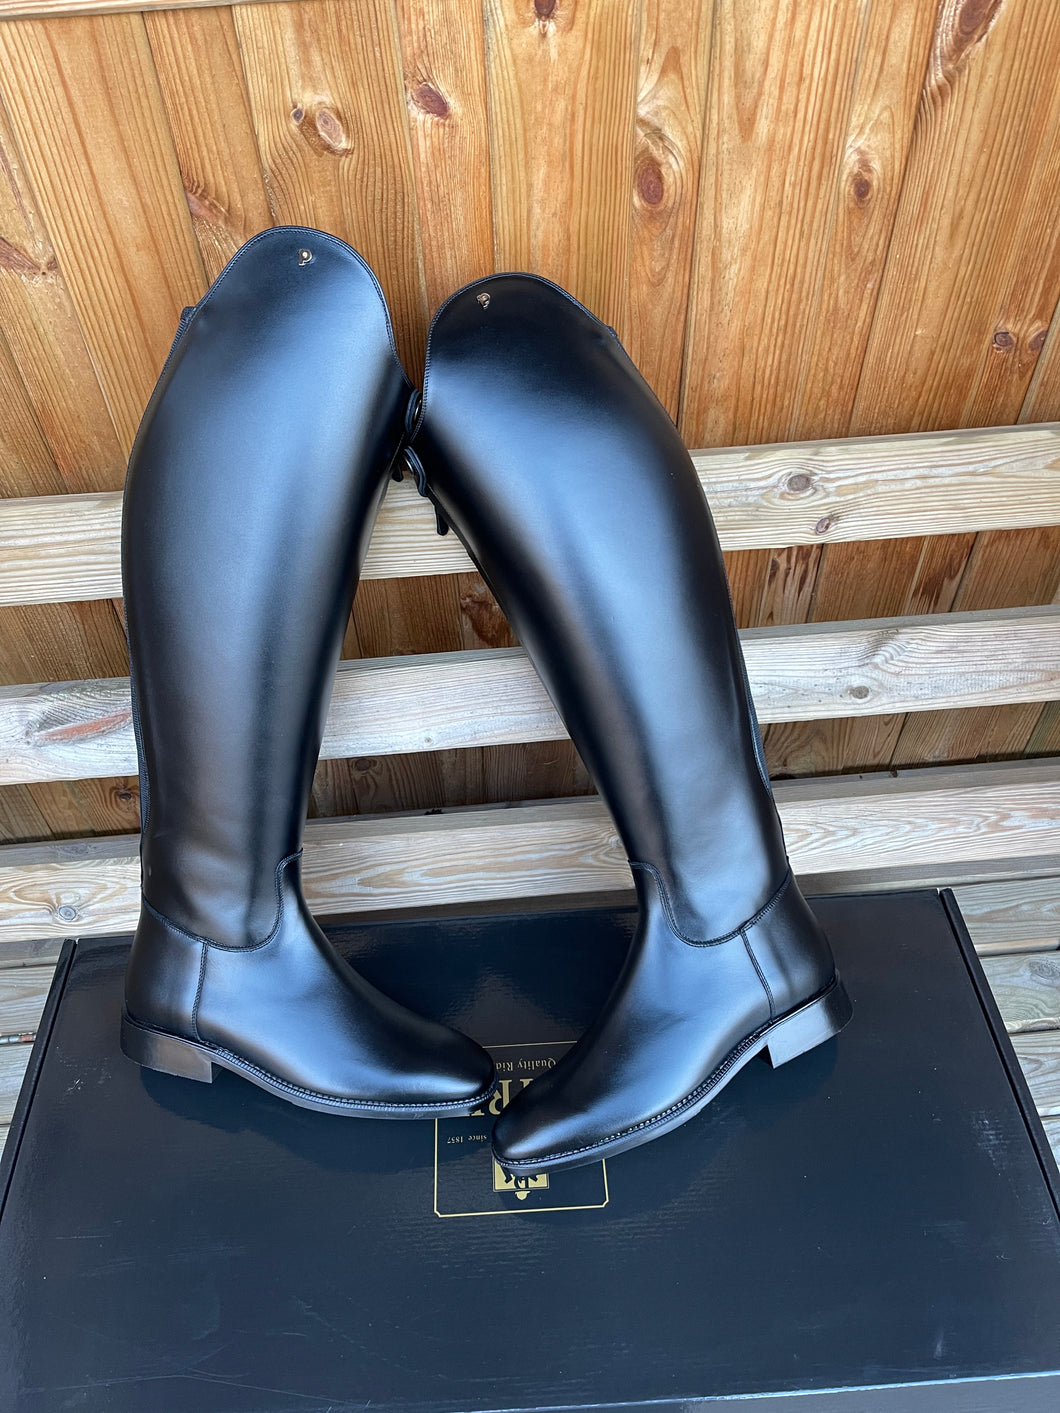 Petrie Padova boots - Black